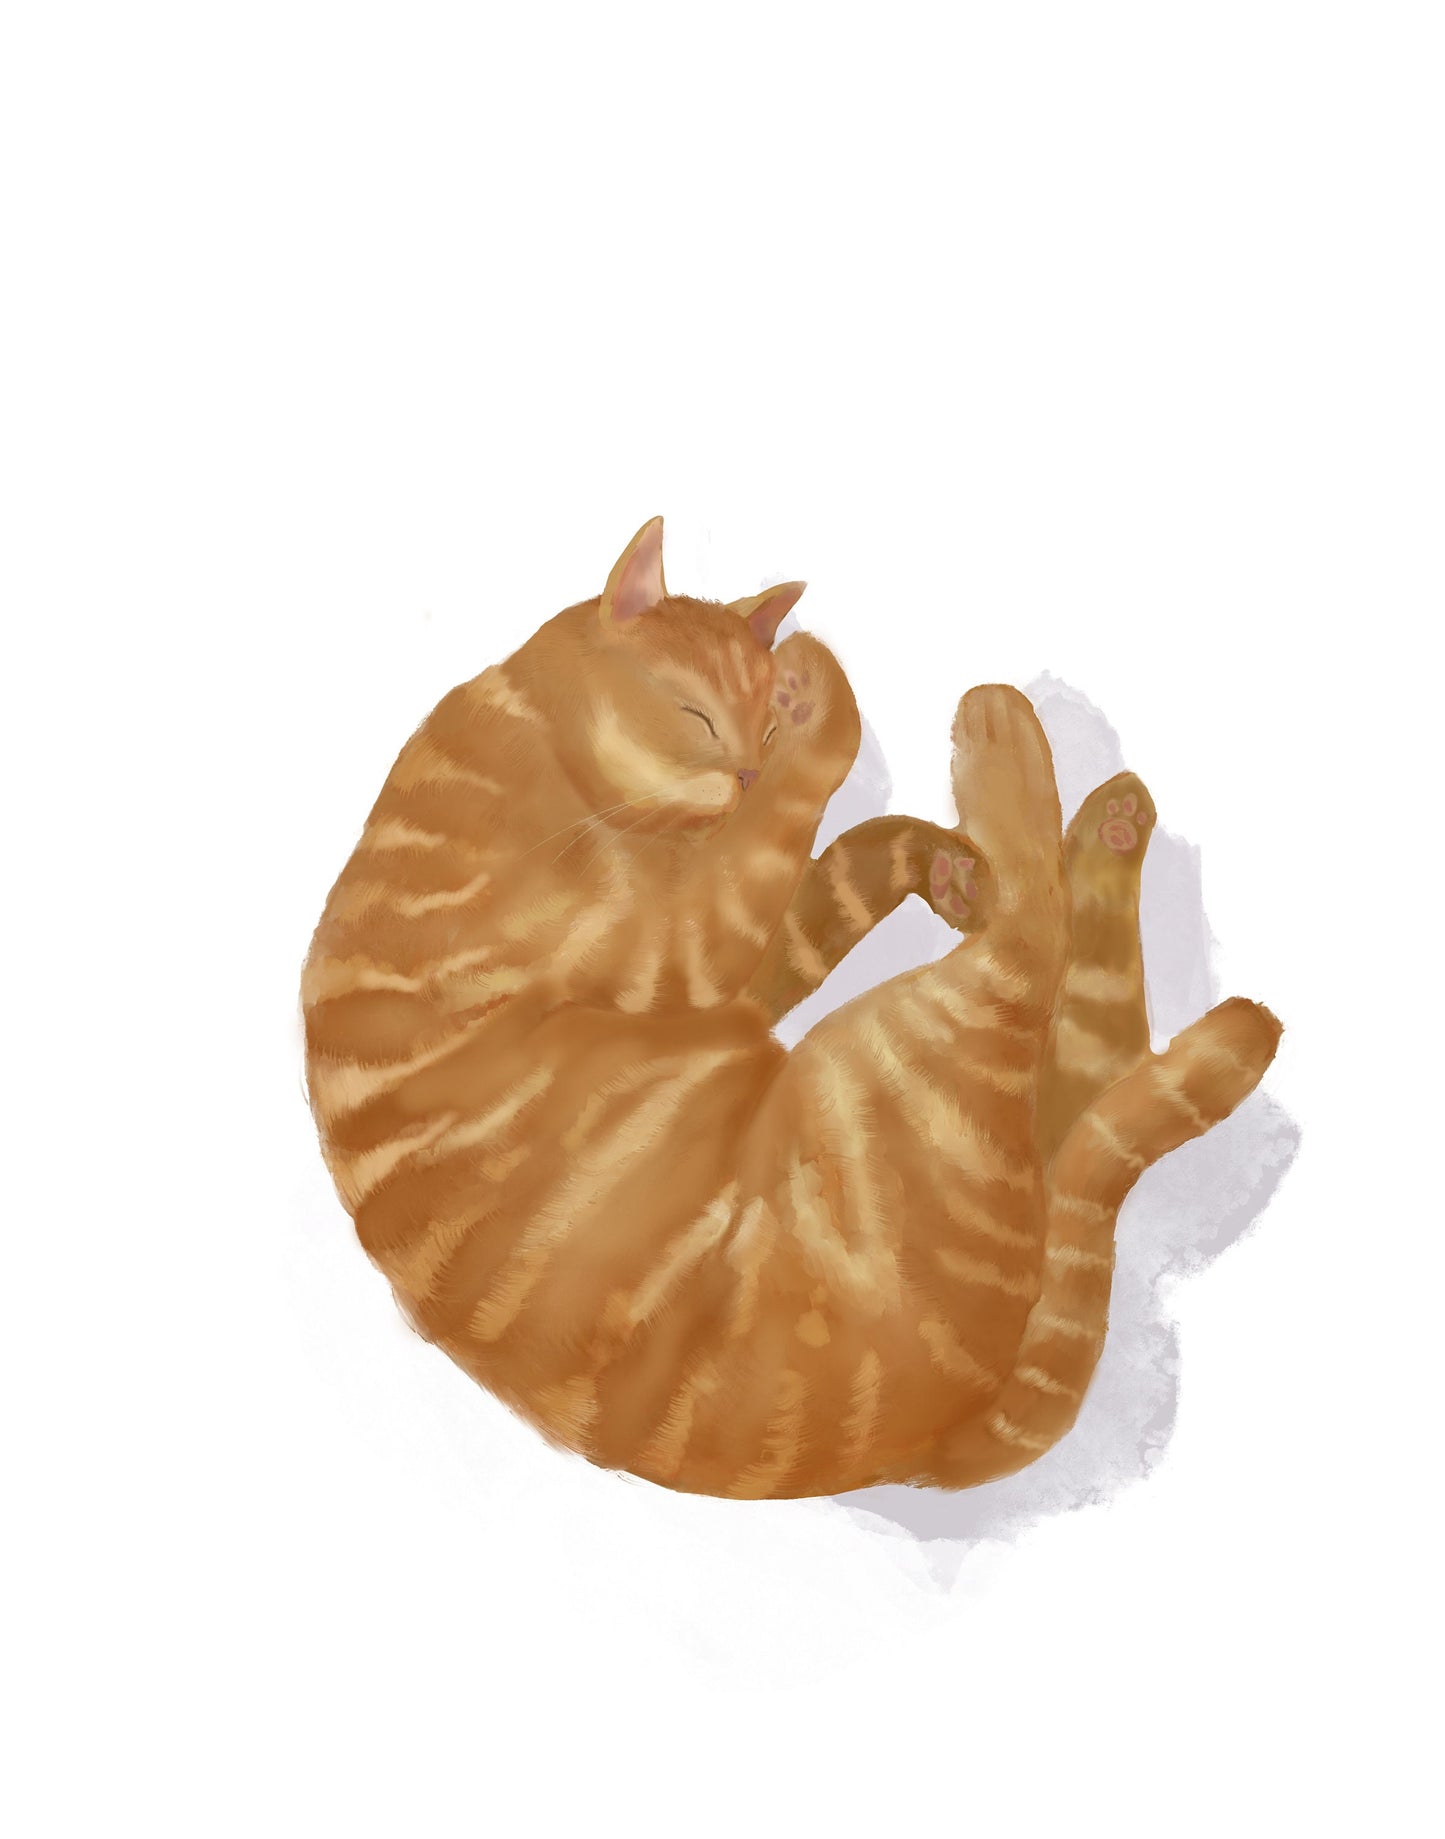 Sleeping Orange And White Tabby Cat Print, Sleeping Cat Print, Sleeping Orange Cat Art, Cat Illustration, Home Decor, Sleeping Cat Painting